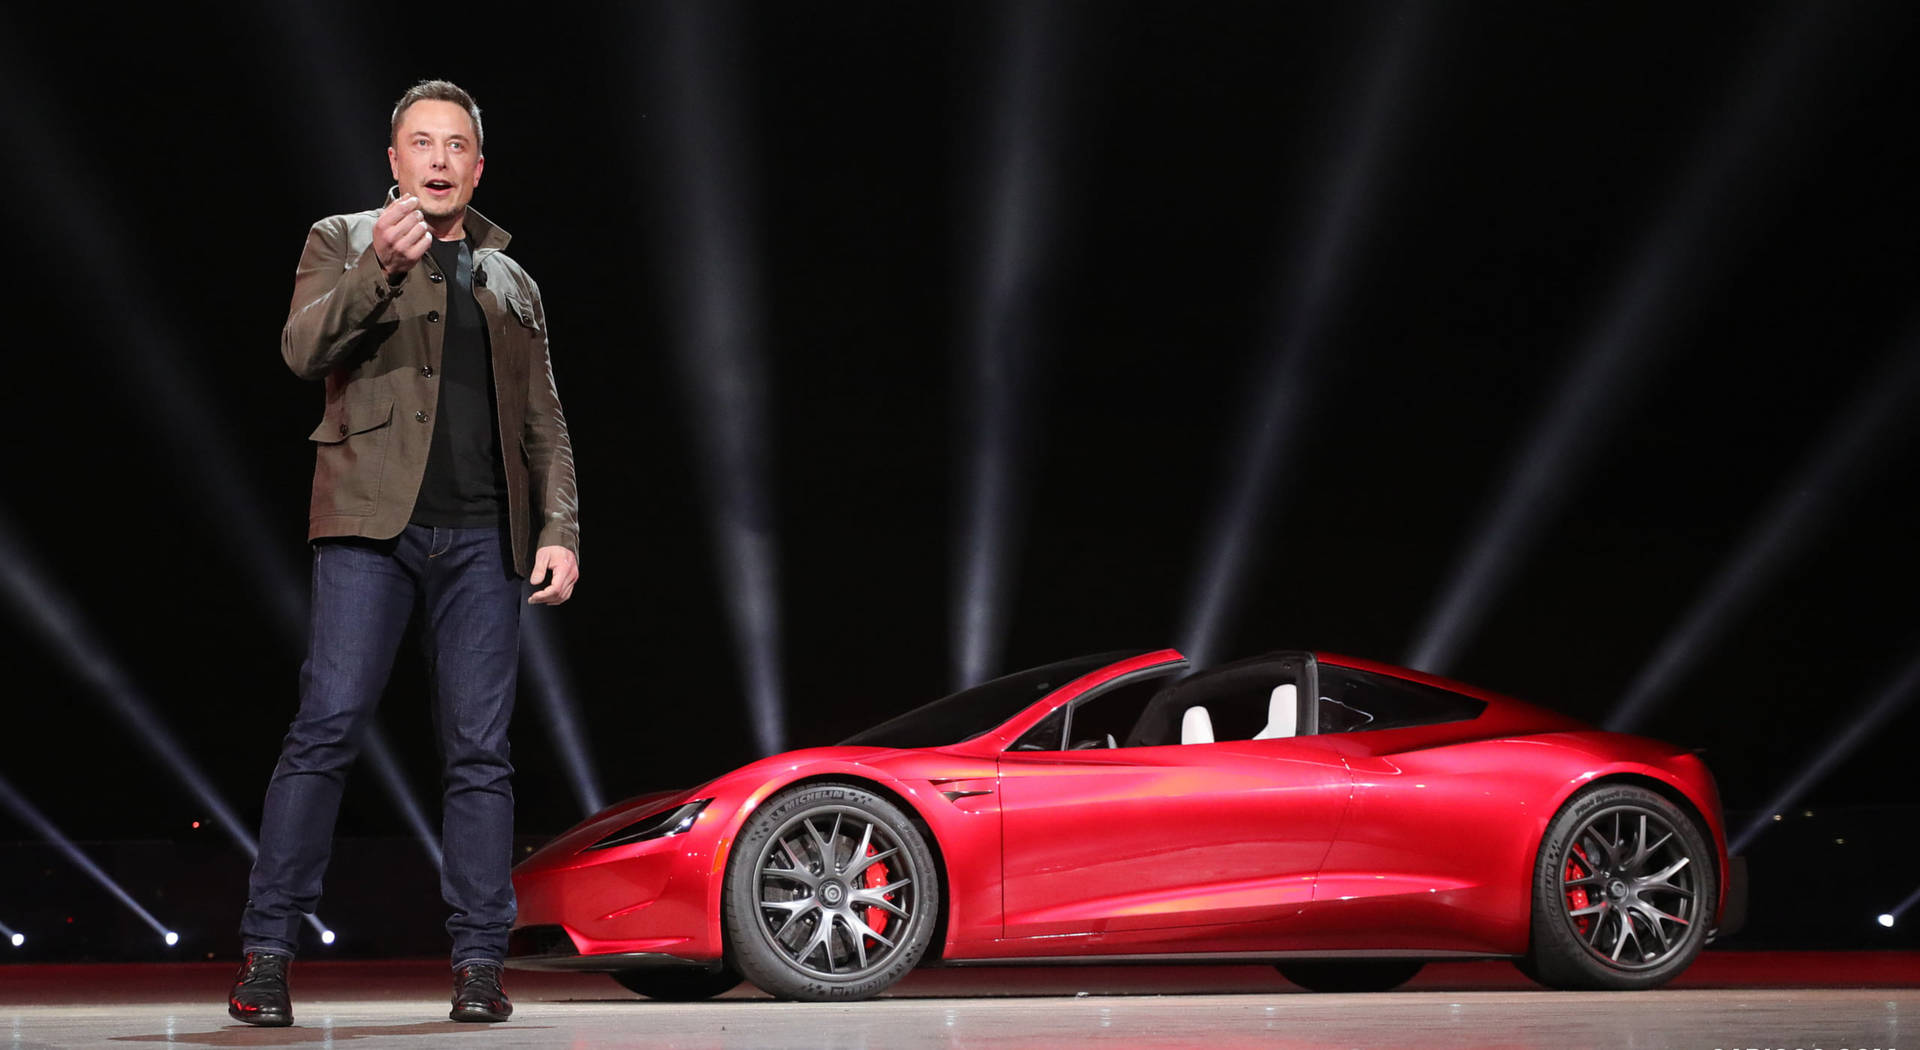 Elon Musk Tesla Roadster Launch 2017